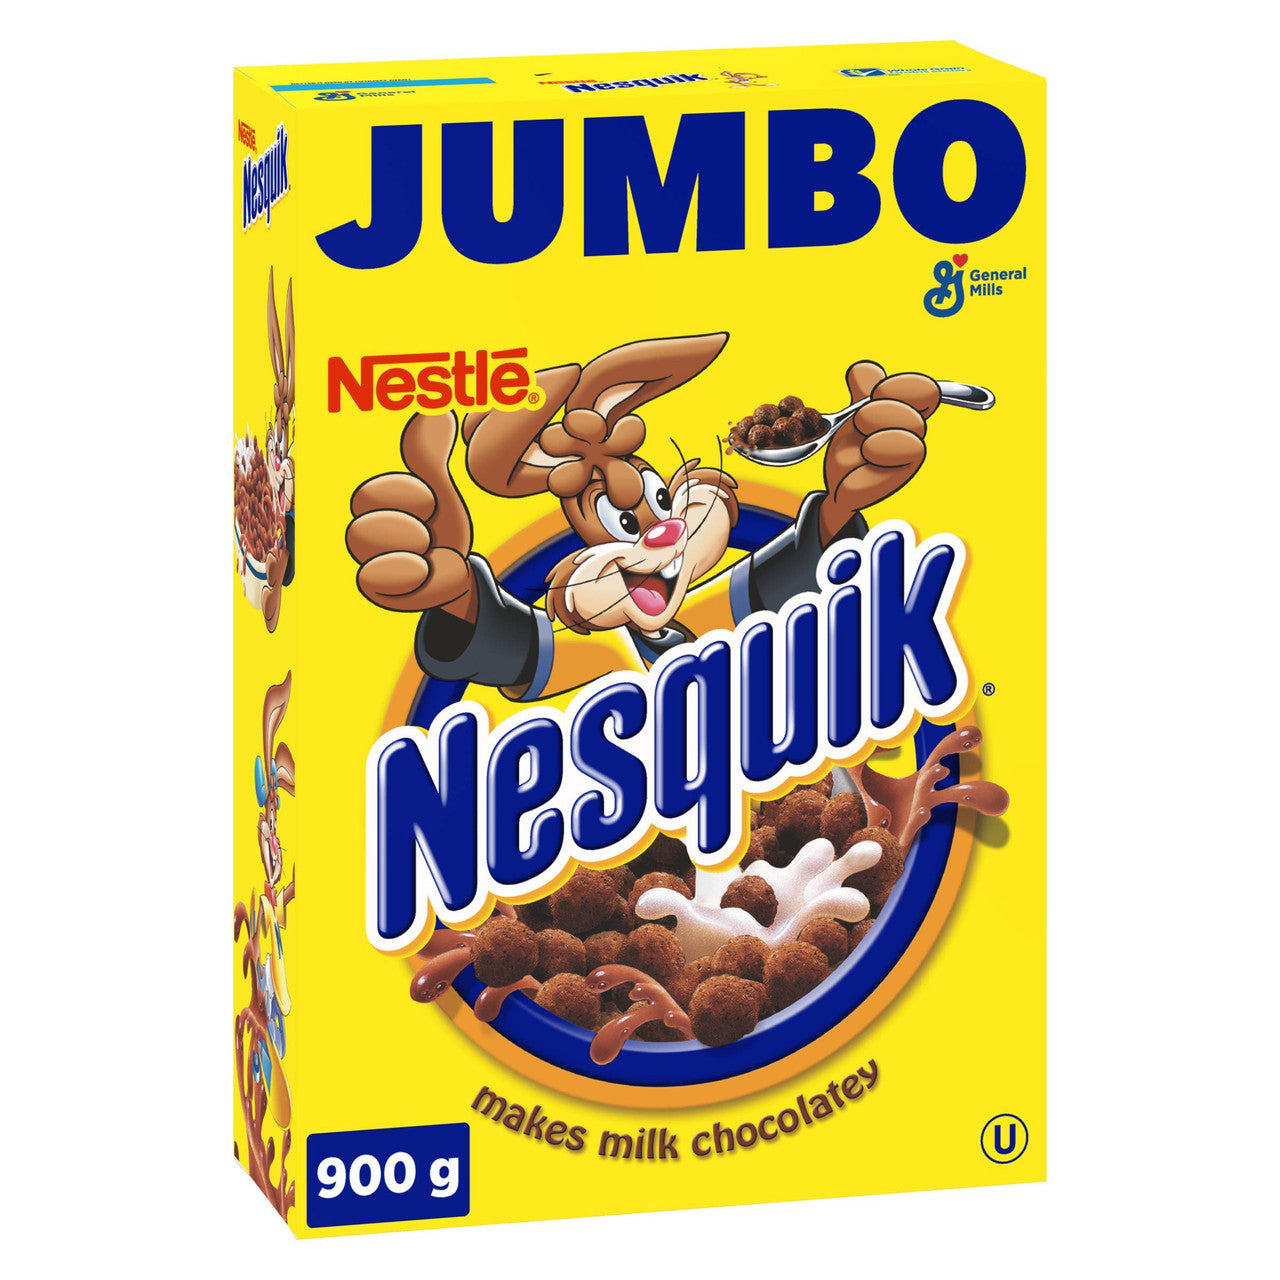 Nesquik Chocolately Cereal Jumbo, 900g/32 oz., {Imported from Canada}